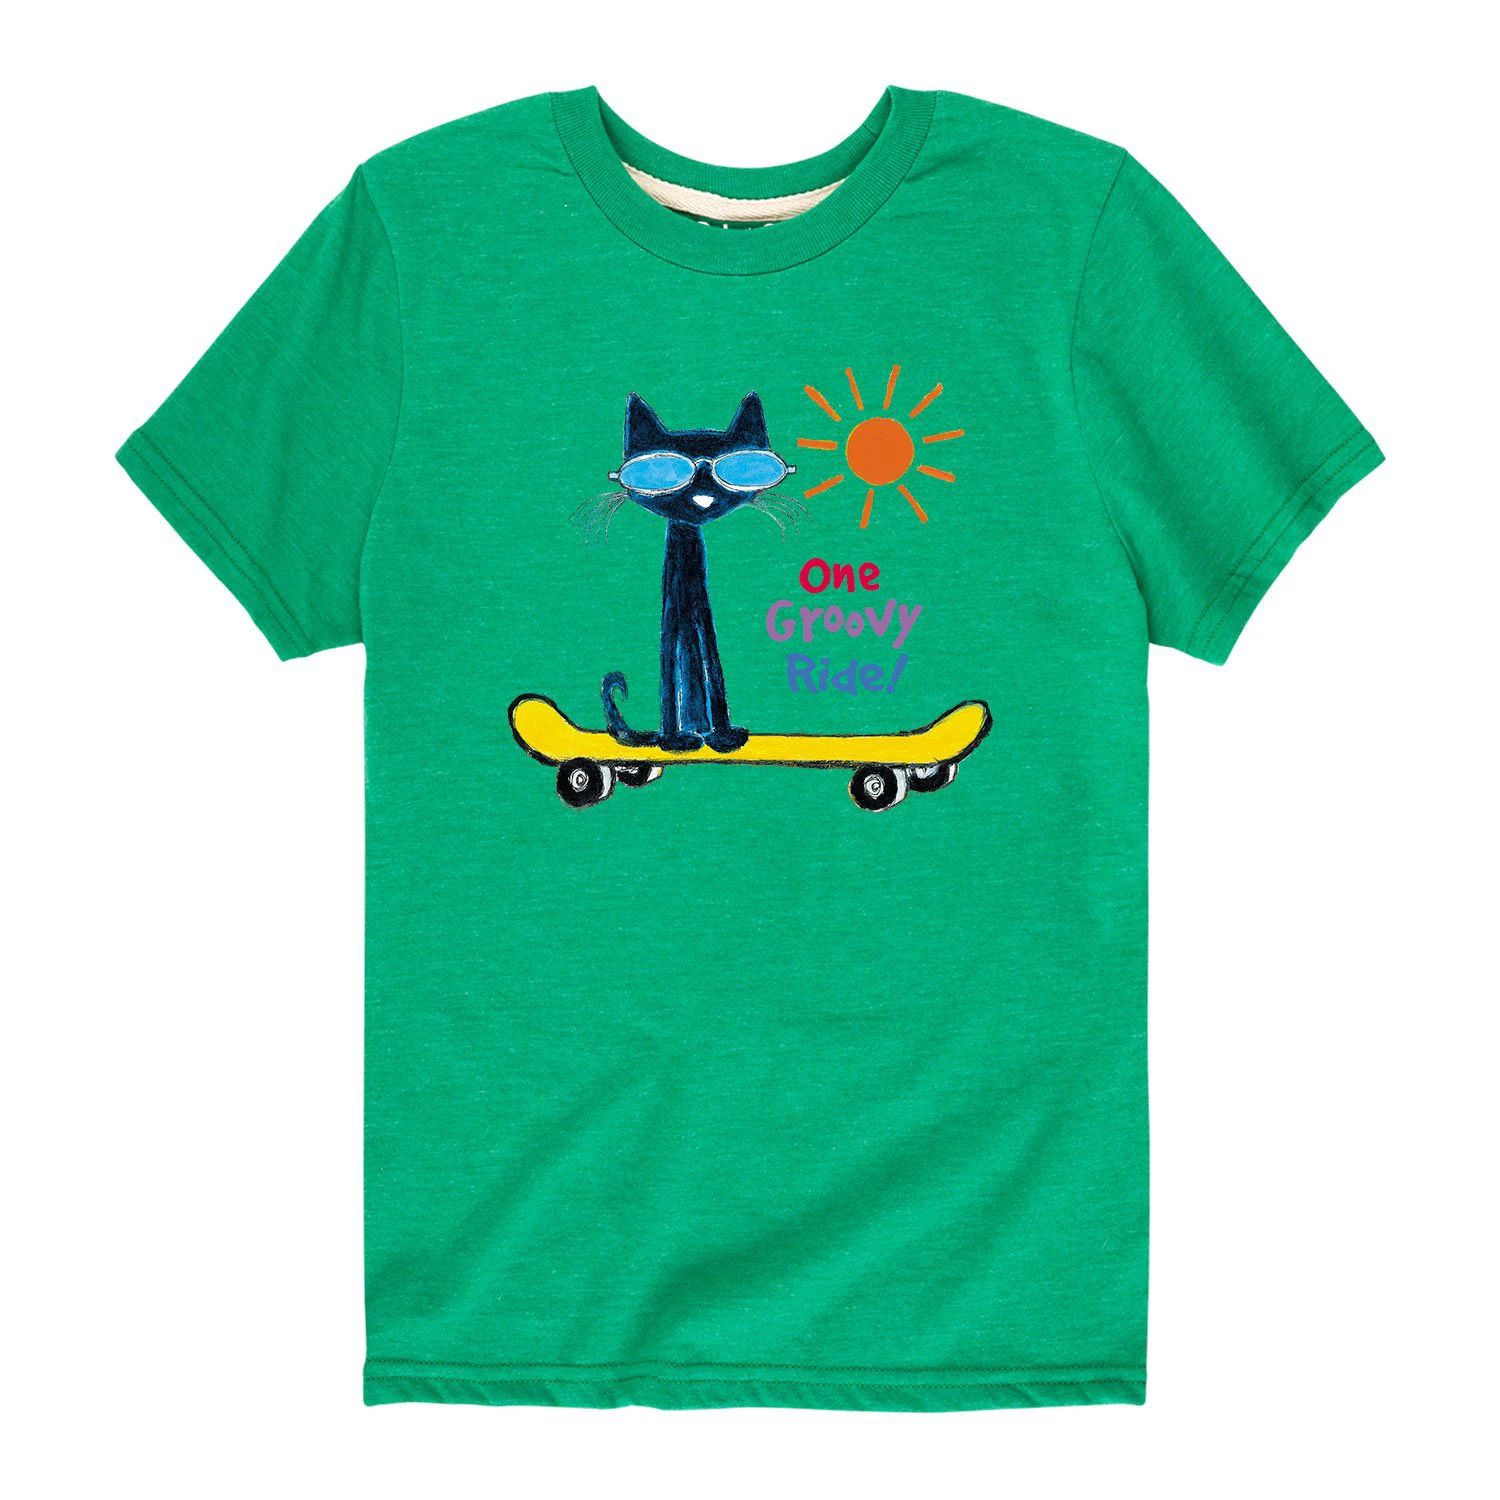 Футболка с рисунком скейтборда для мальчиков 8–20 лет Pete The Cat Licensed Character футболка groovy с рисунком pete the cat для мальчиков 8–20 лет licensed character